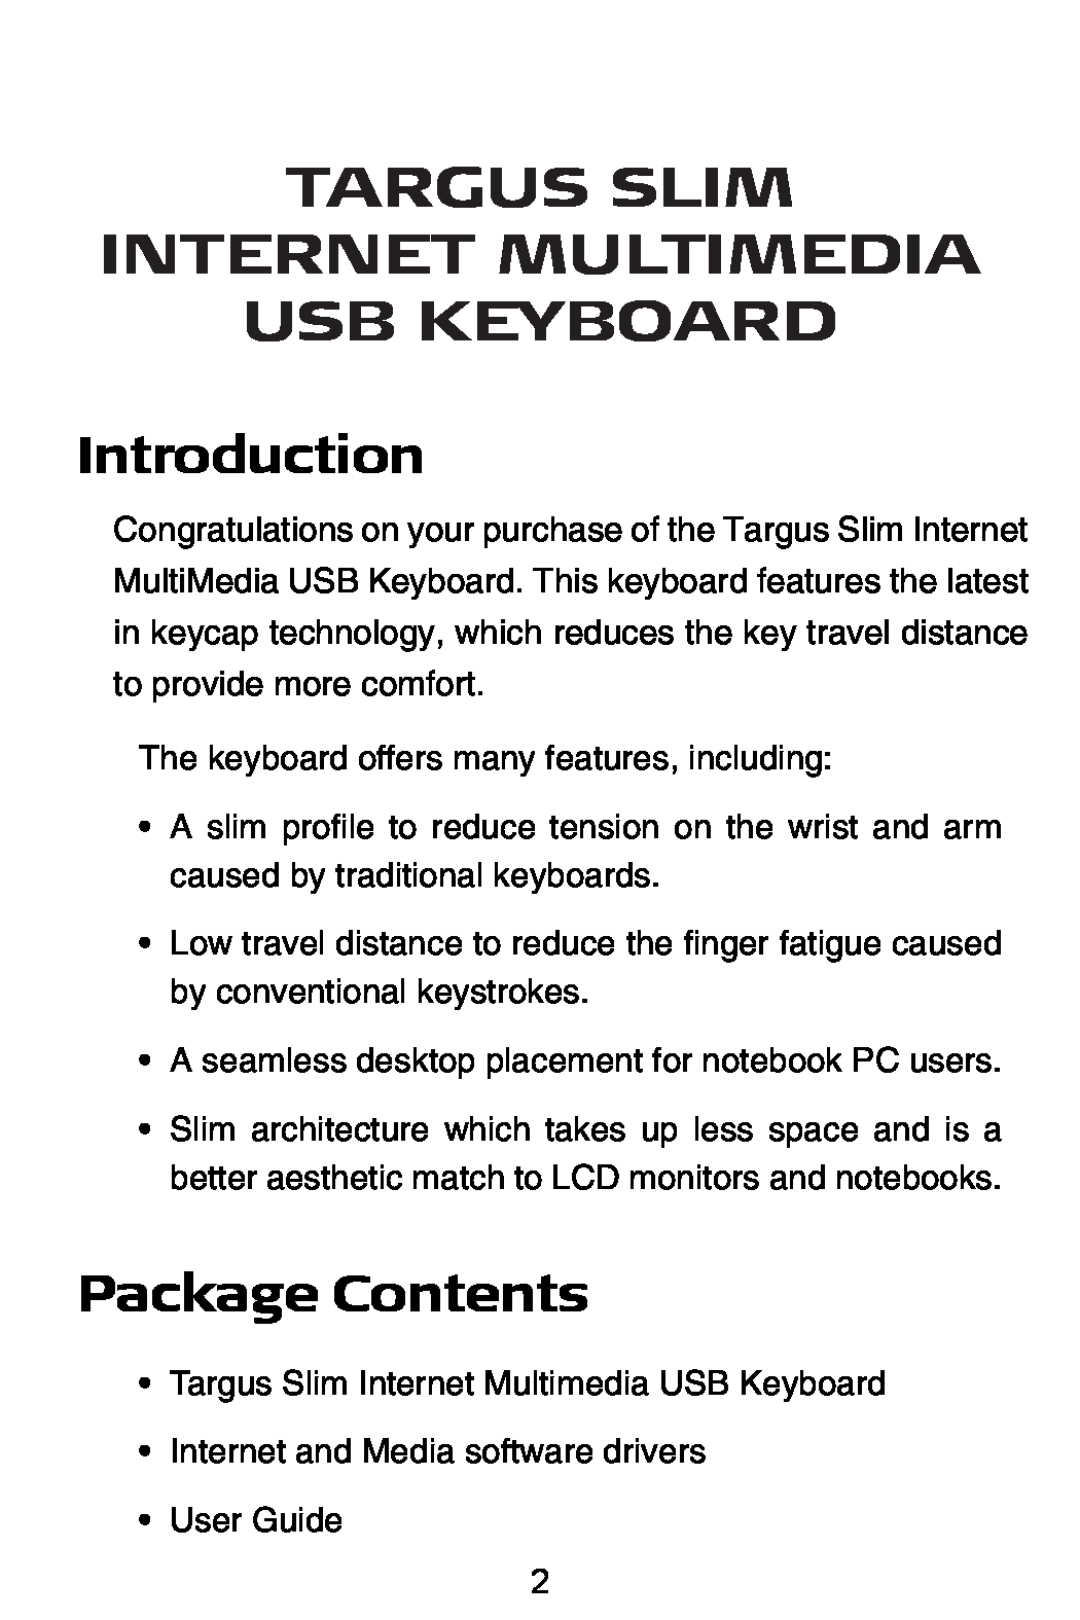 Targus slim internet multimedia USB keyboard Introduction, Package Contents, Targus Slim Internet Multimedia Usb Keyboard 